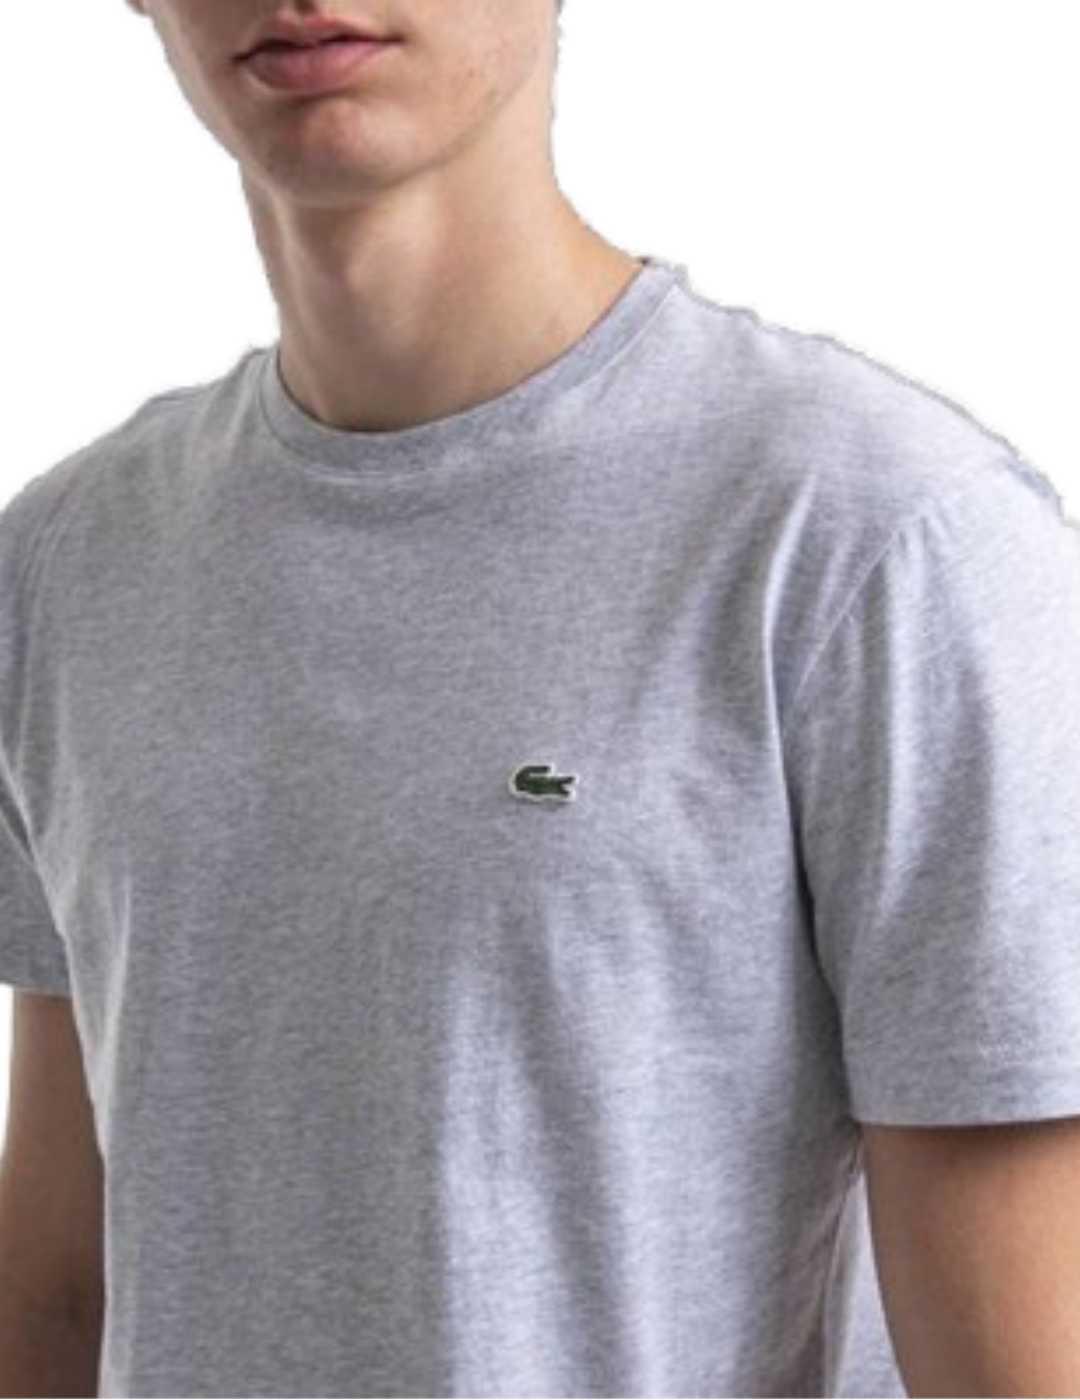 Camiseta Lacoste gris claro de hombre-b